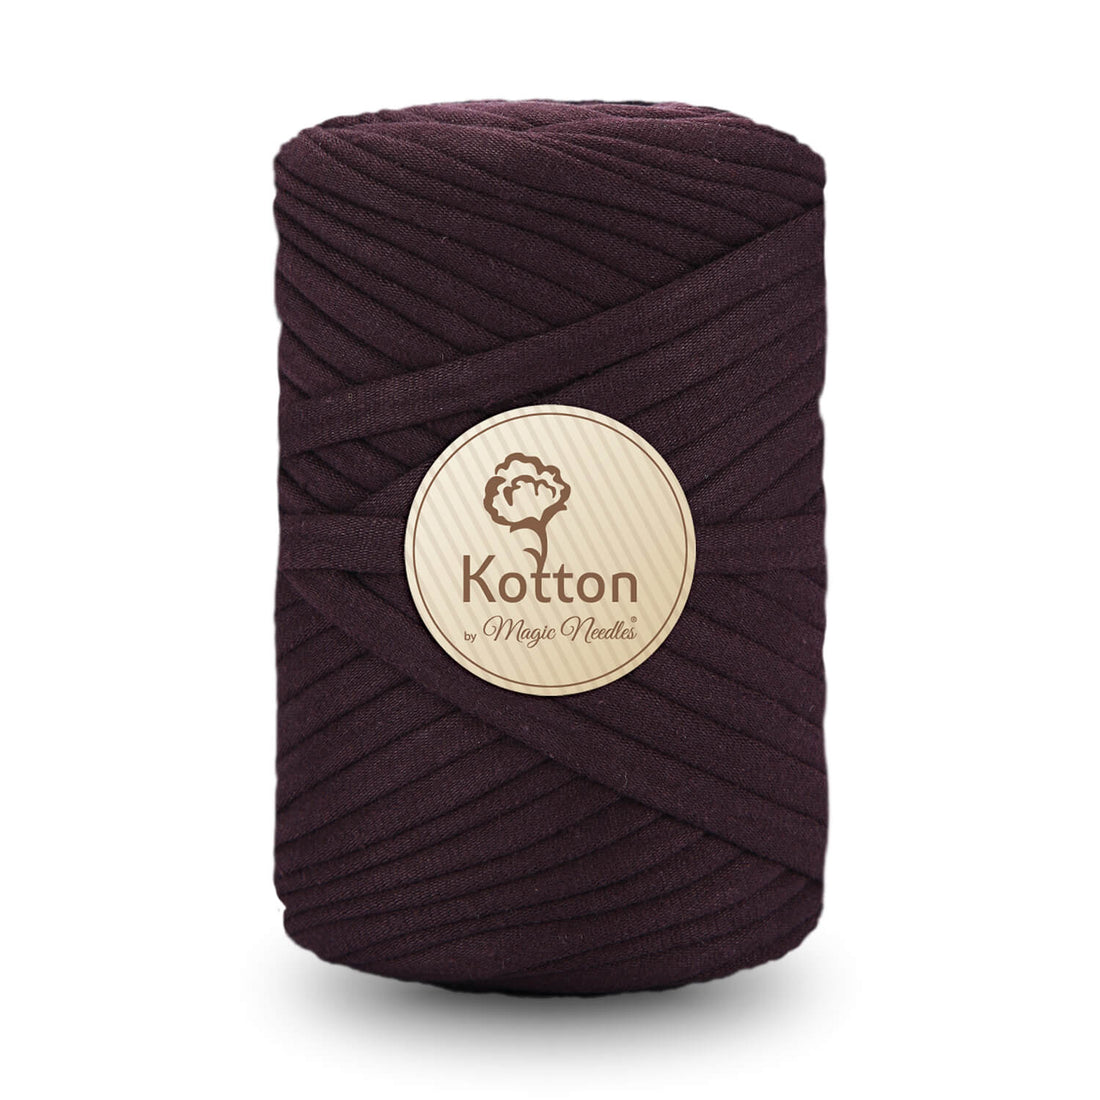 T-Shirt Yarn by Kotton - Chocolate Brown V27